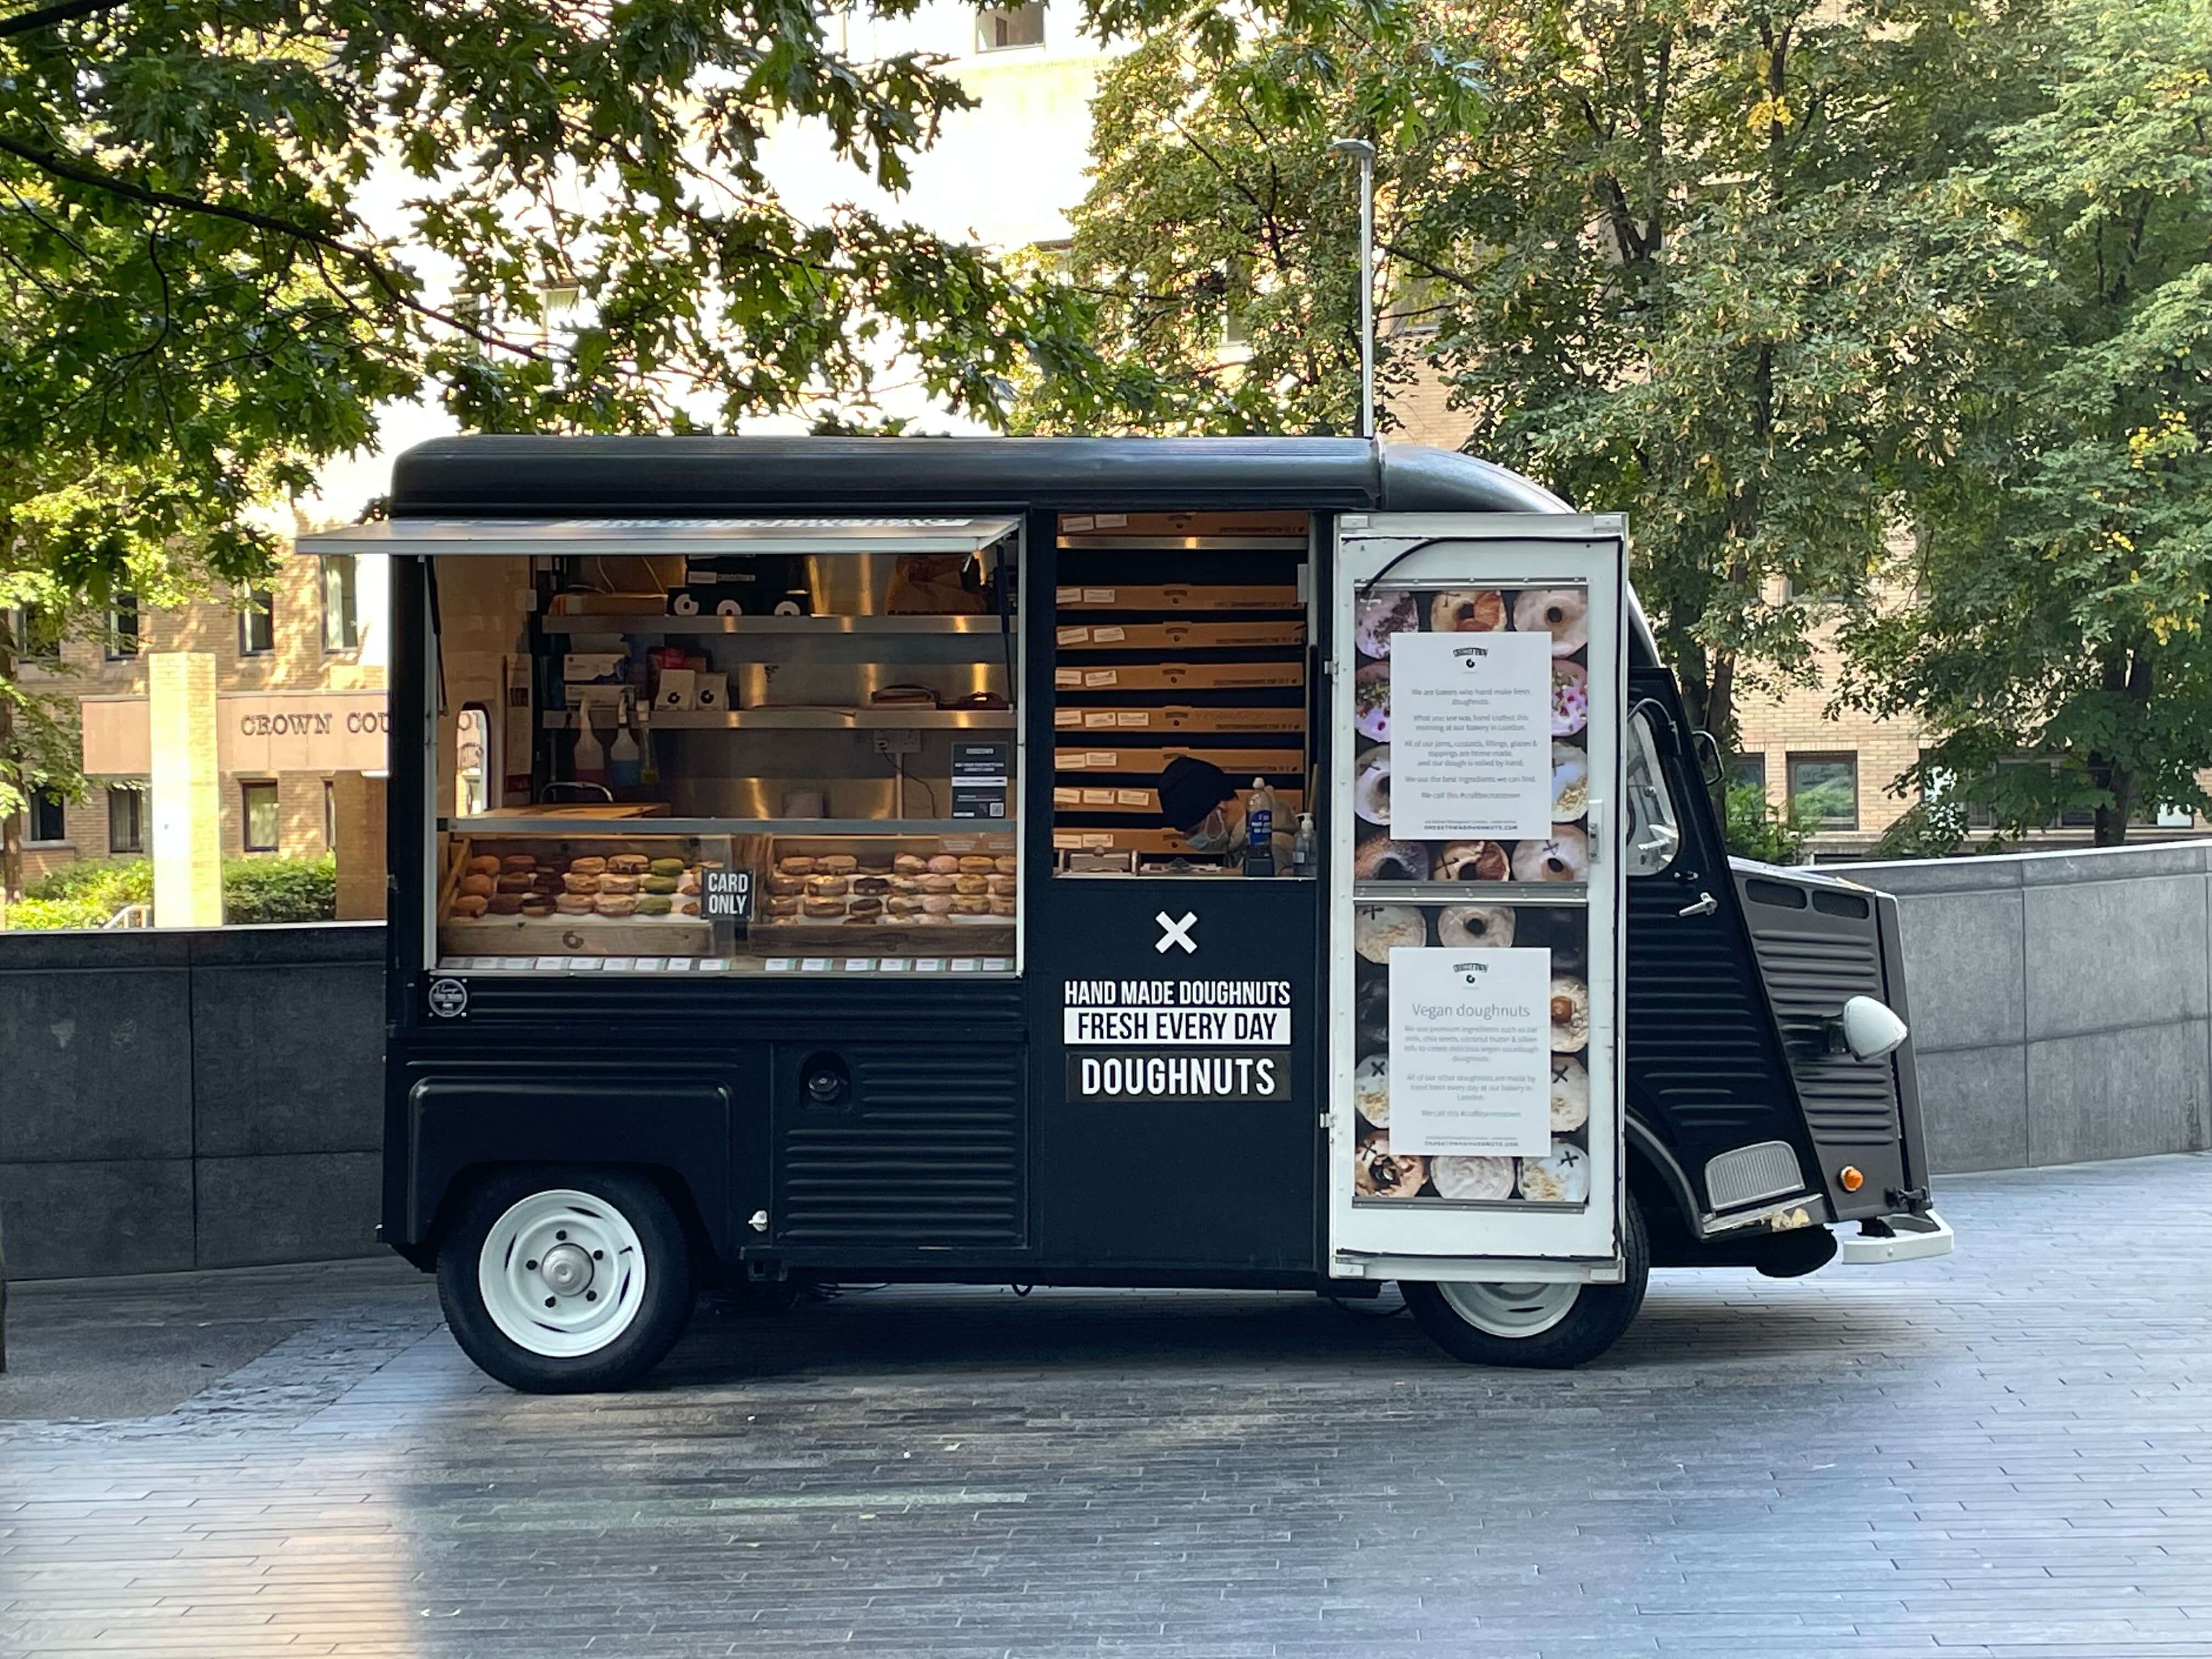 A small black donut truck